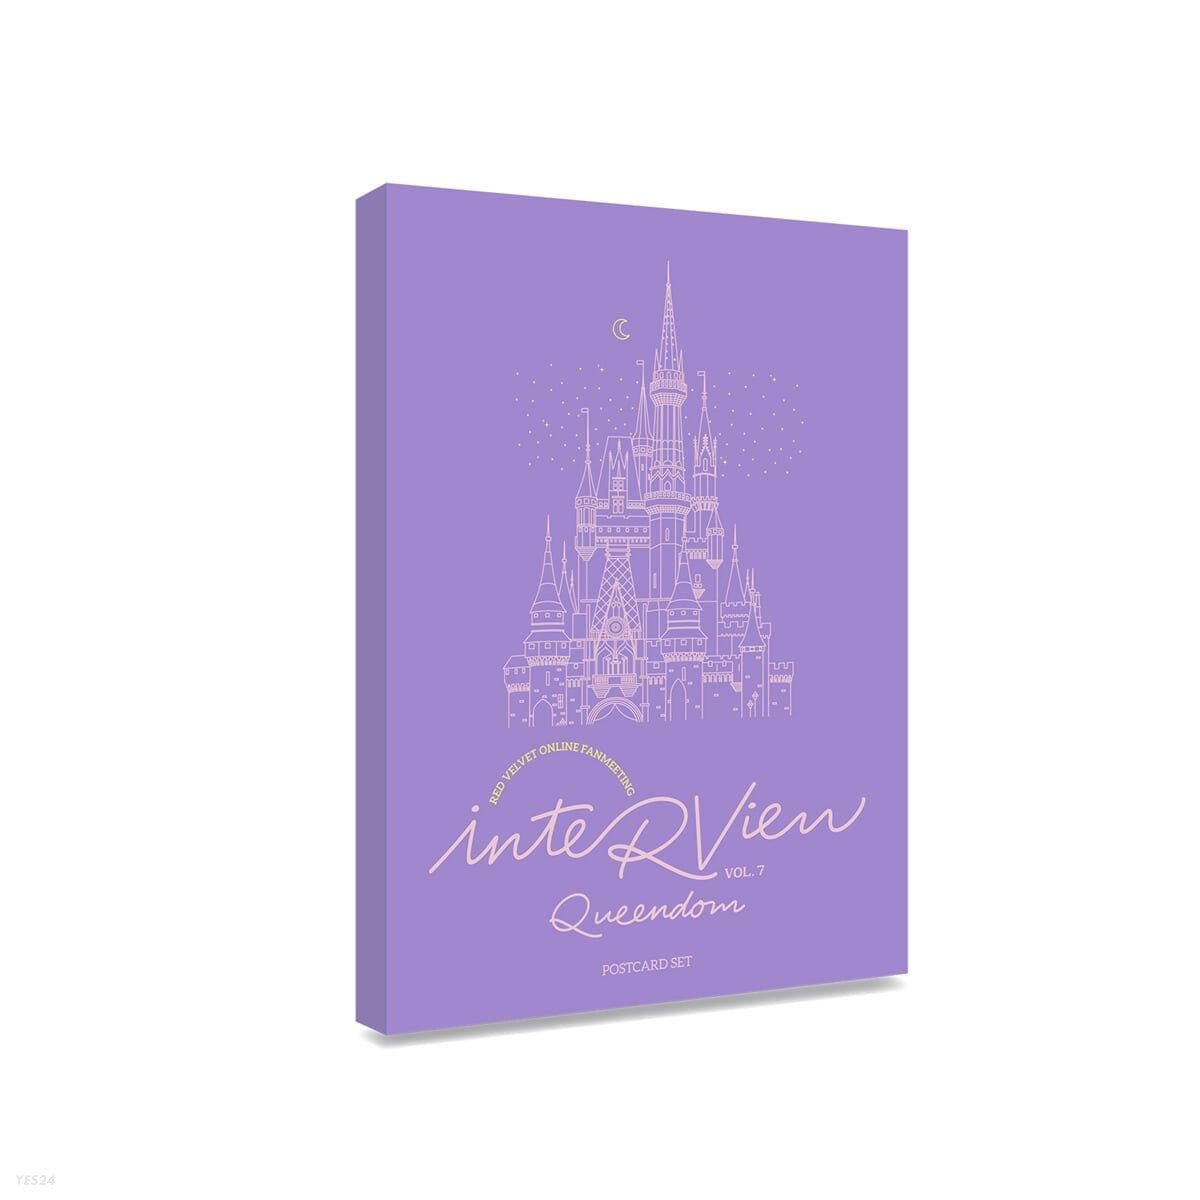 RED VELVET - Queendom (inteRView Vol.7) Postcard Book Beyond Live - Daebak